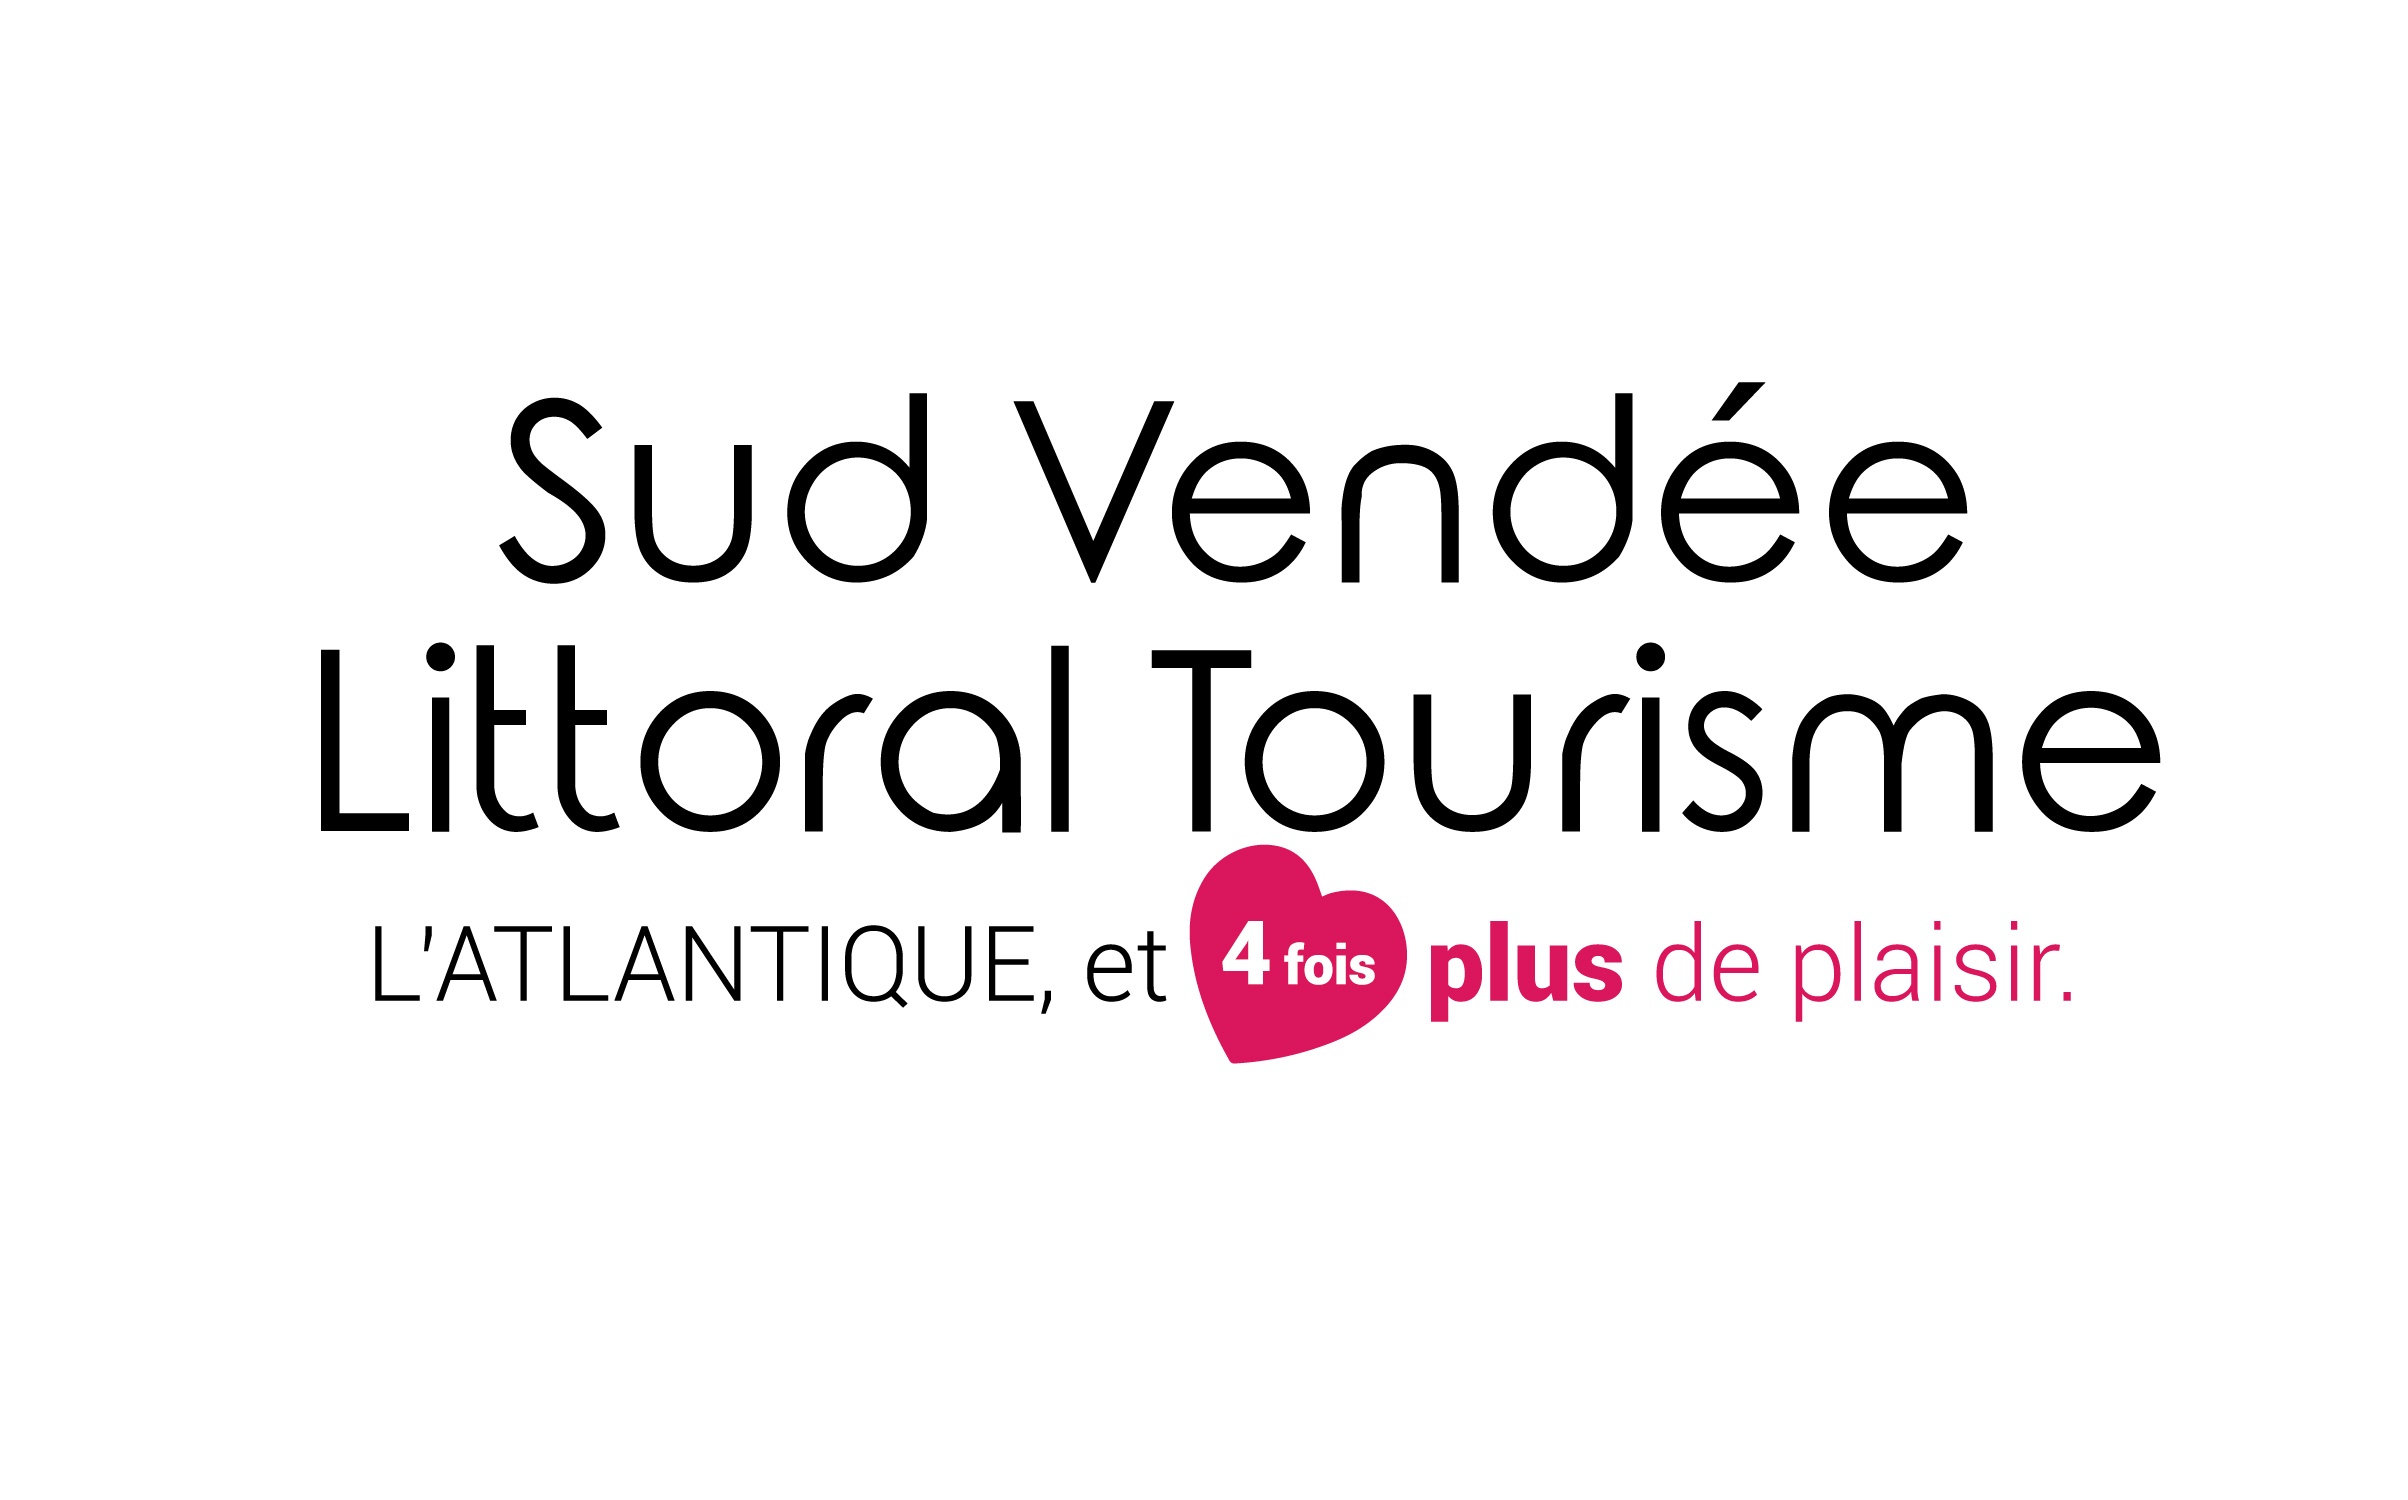 Sud Vendée Littoral Tourisme